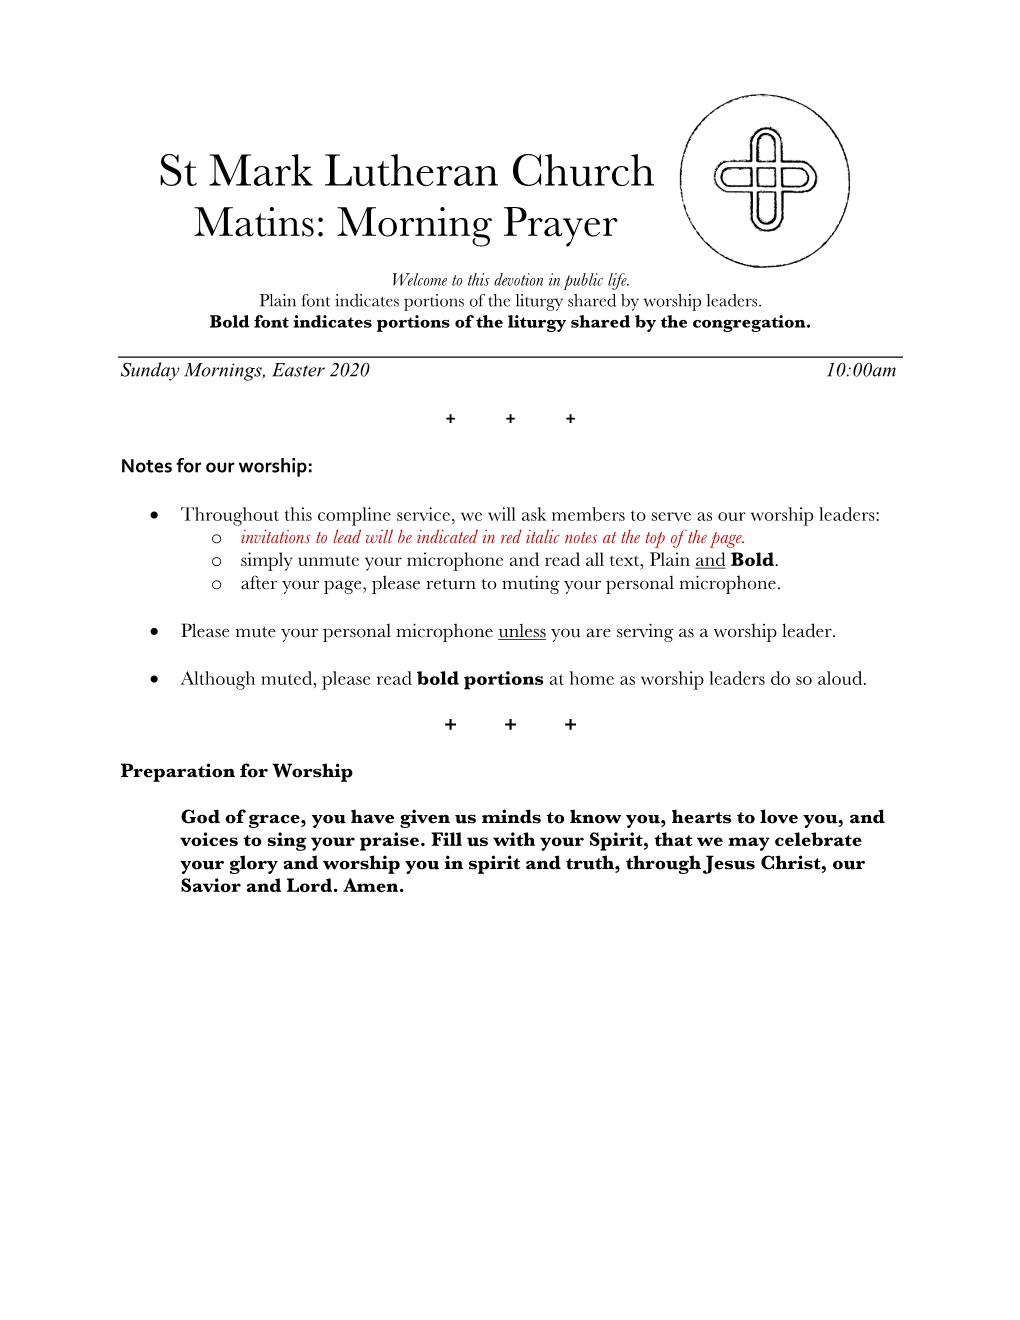 St Mark Lutheran Church Matins: Morning Prayer